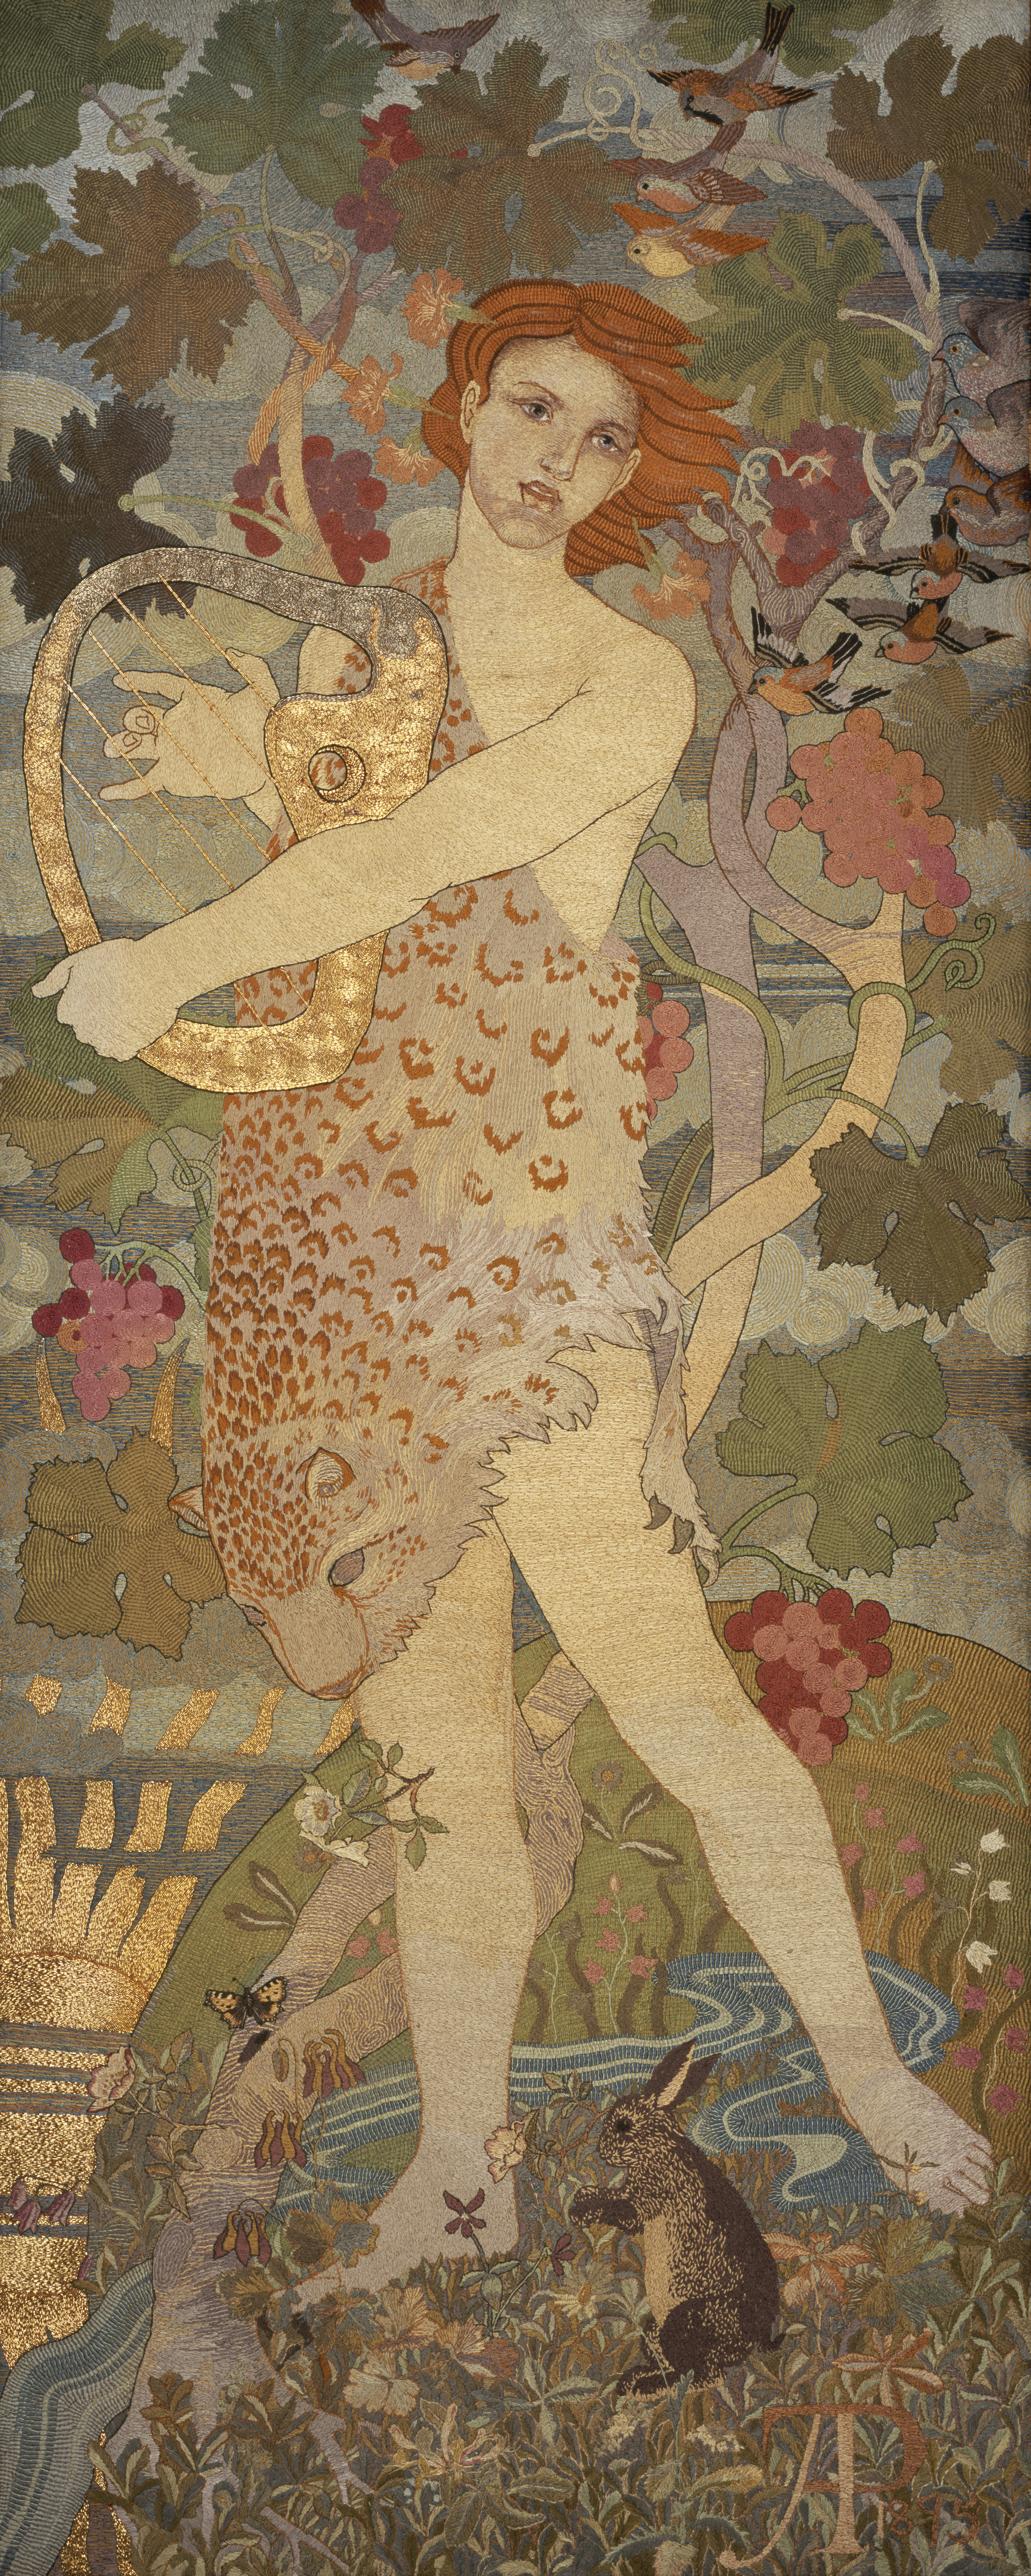 تقدُّم الروح: المدخل by Phoebe Anna Traquair - 1895 - 180.67 x 71.20 cm 